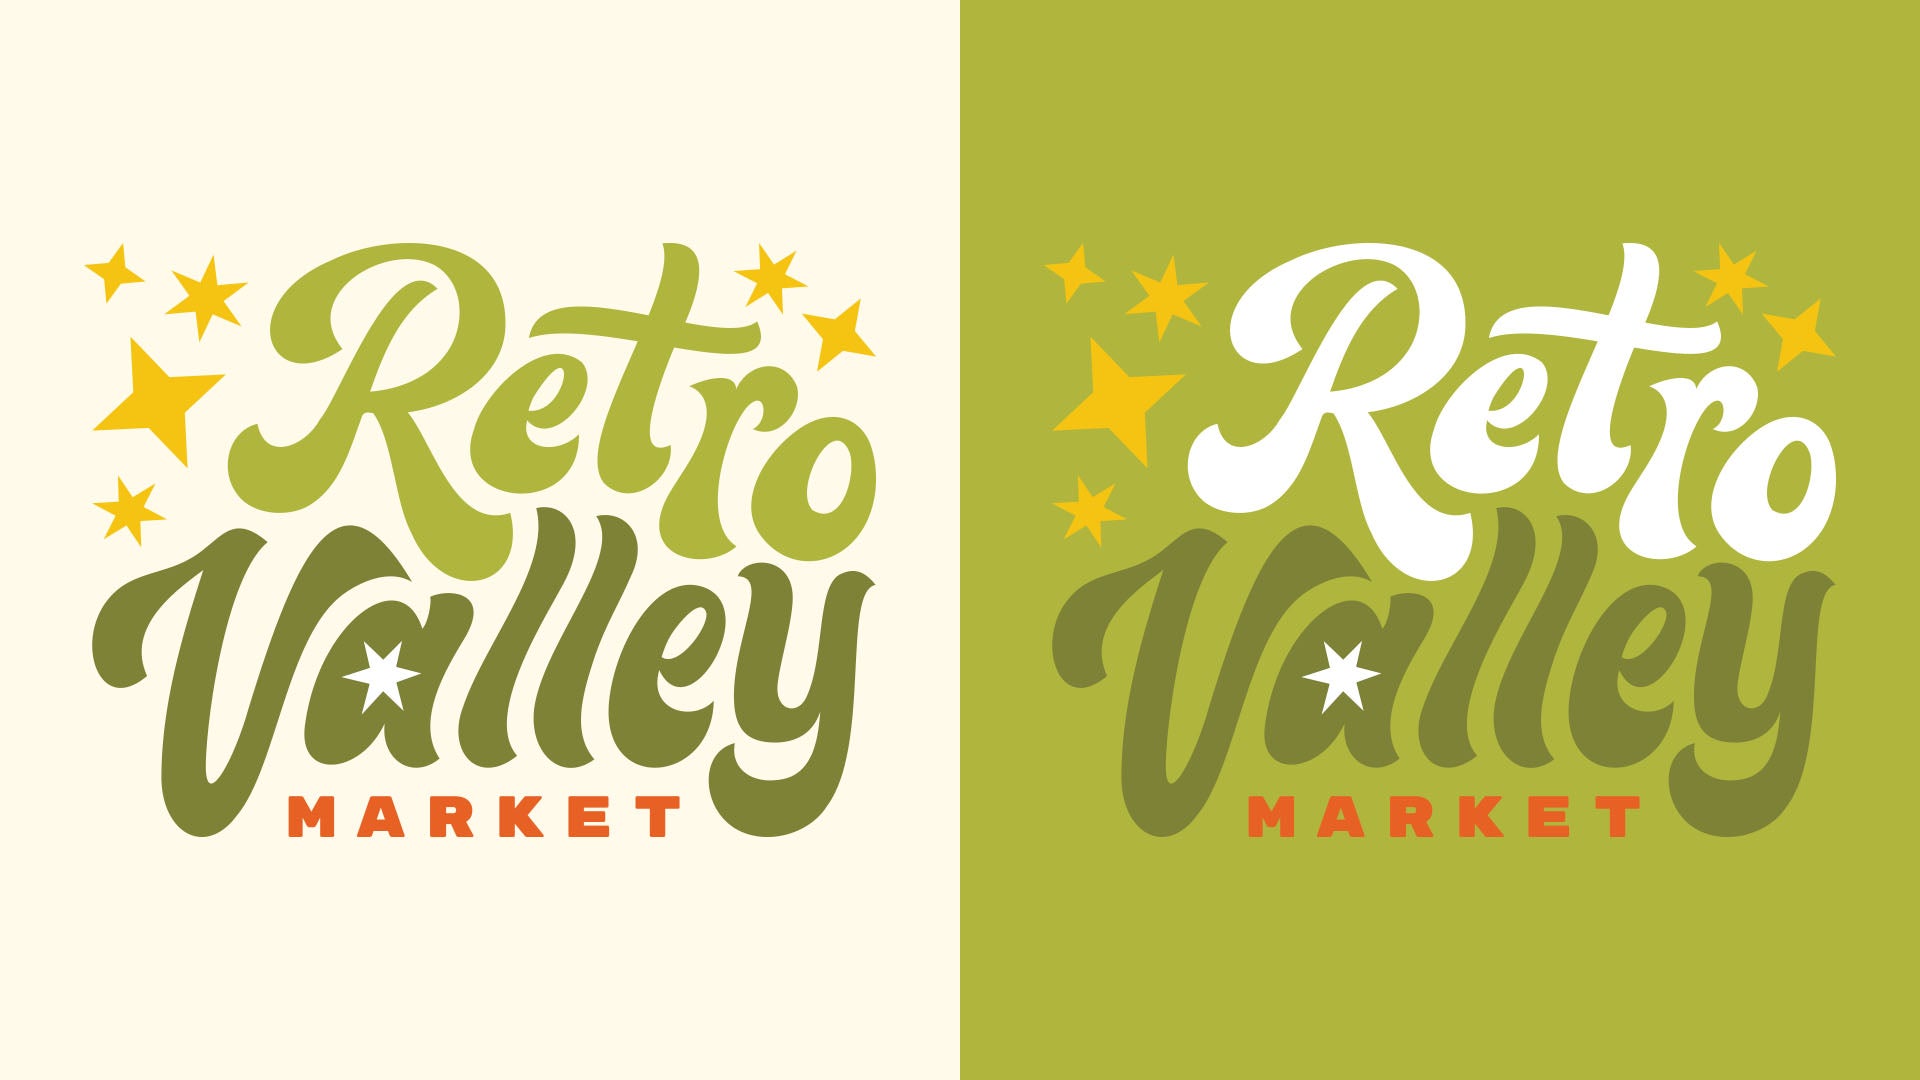 Retro Valley Logo Set